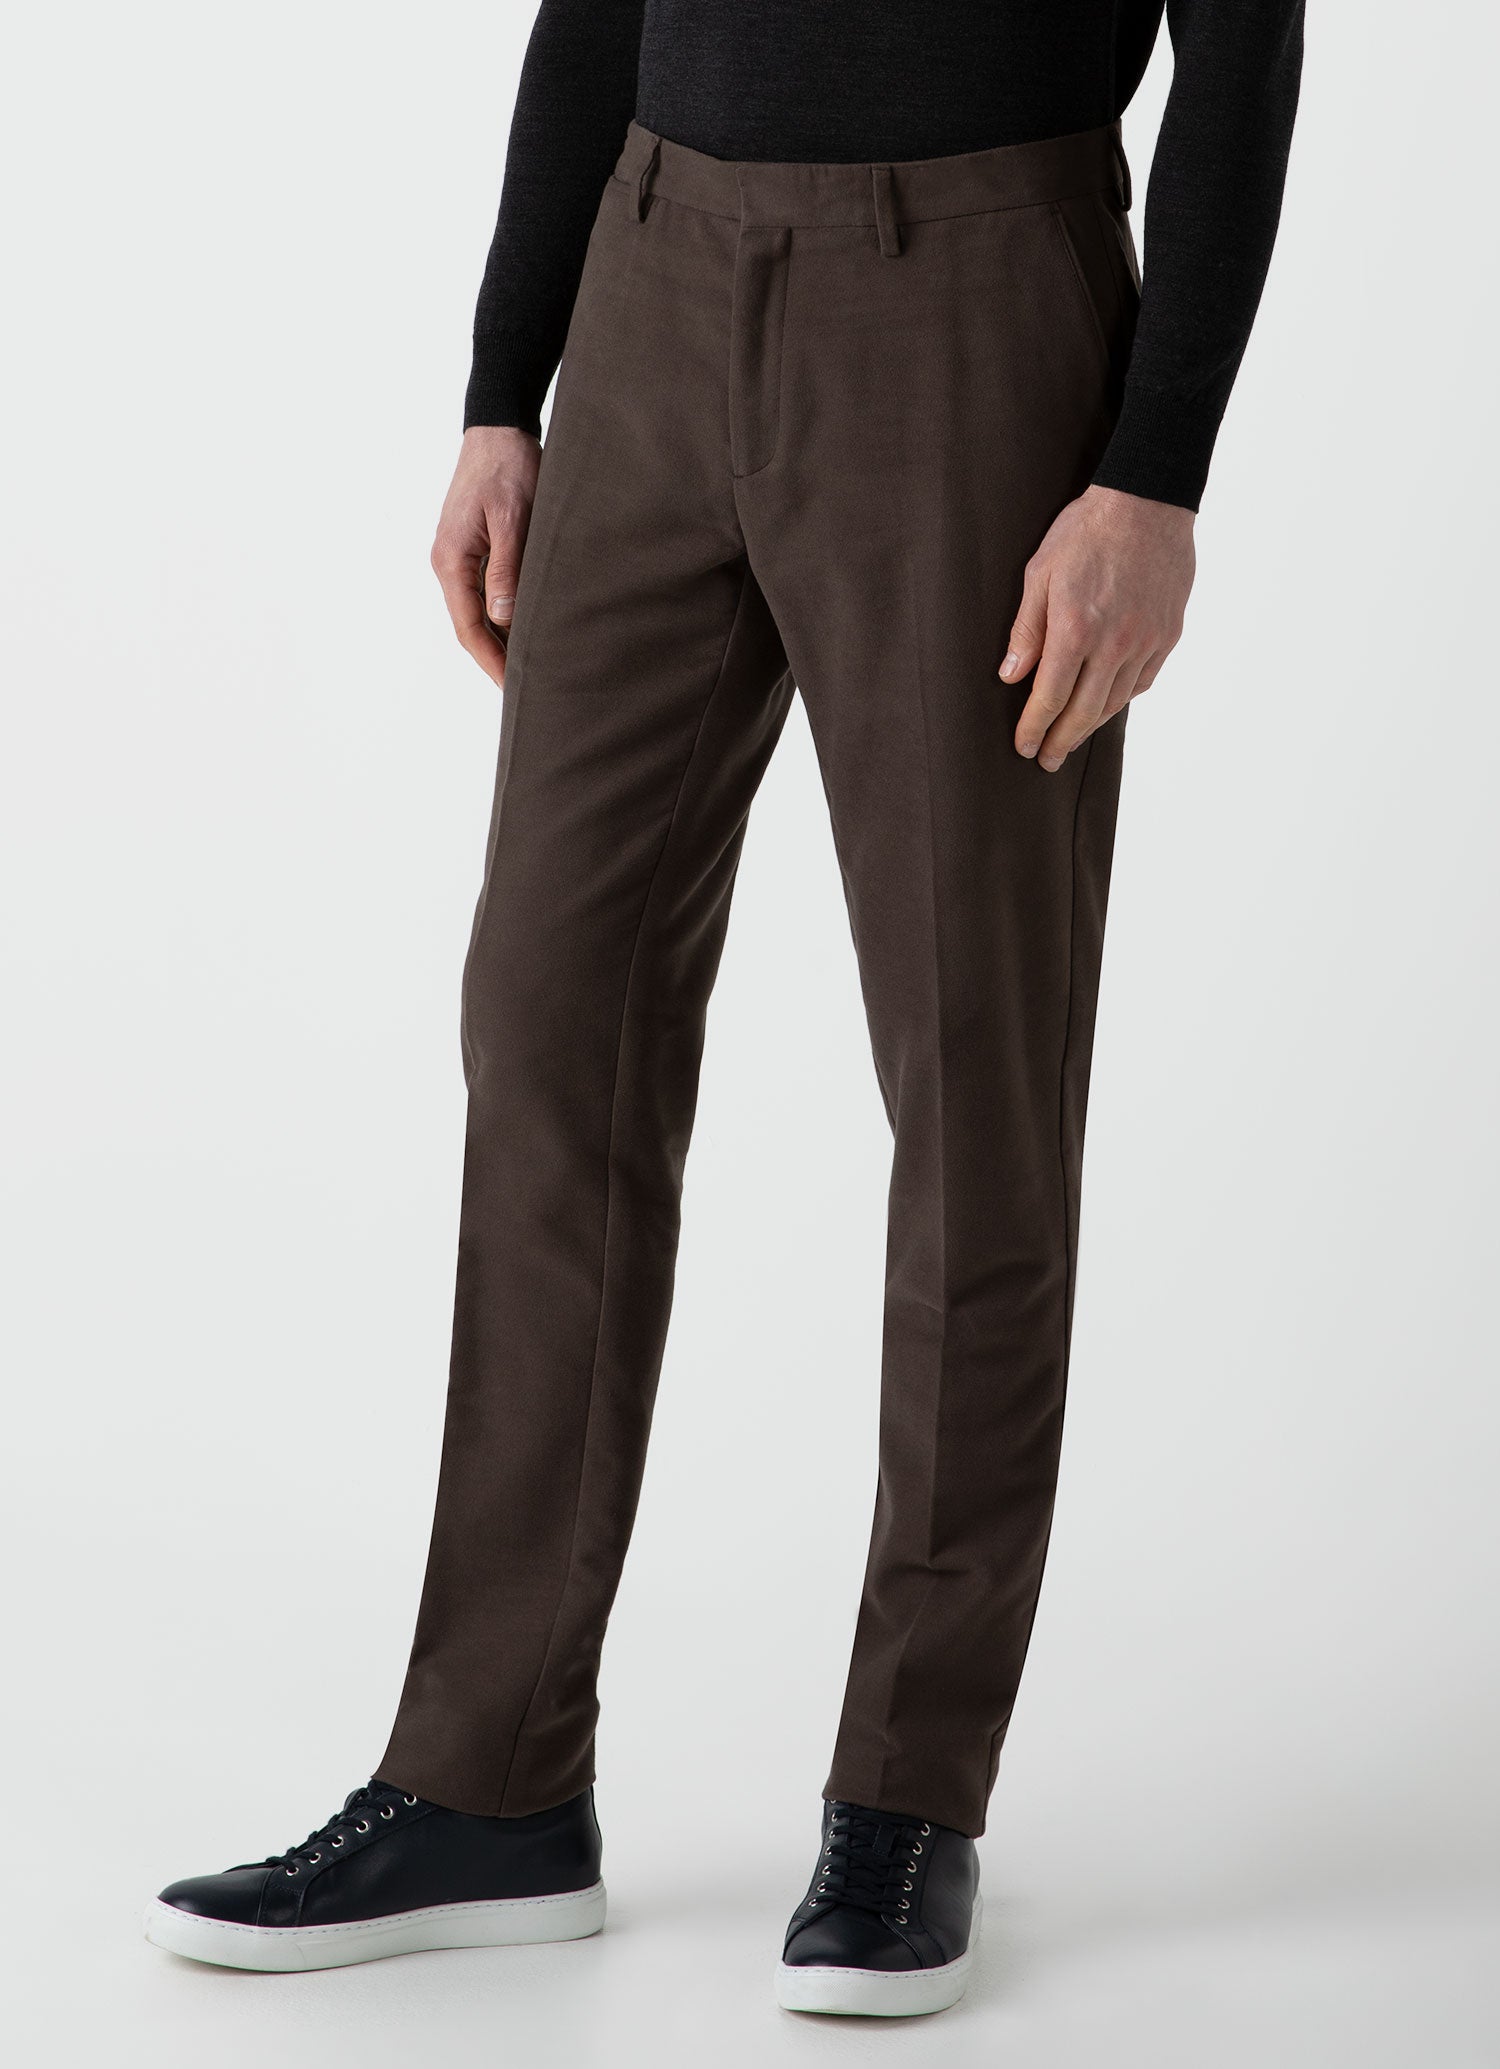 Charles Tyrwhitt Italian Moleskin Trousers - Tan sz 32 | eBay